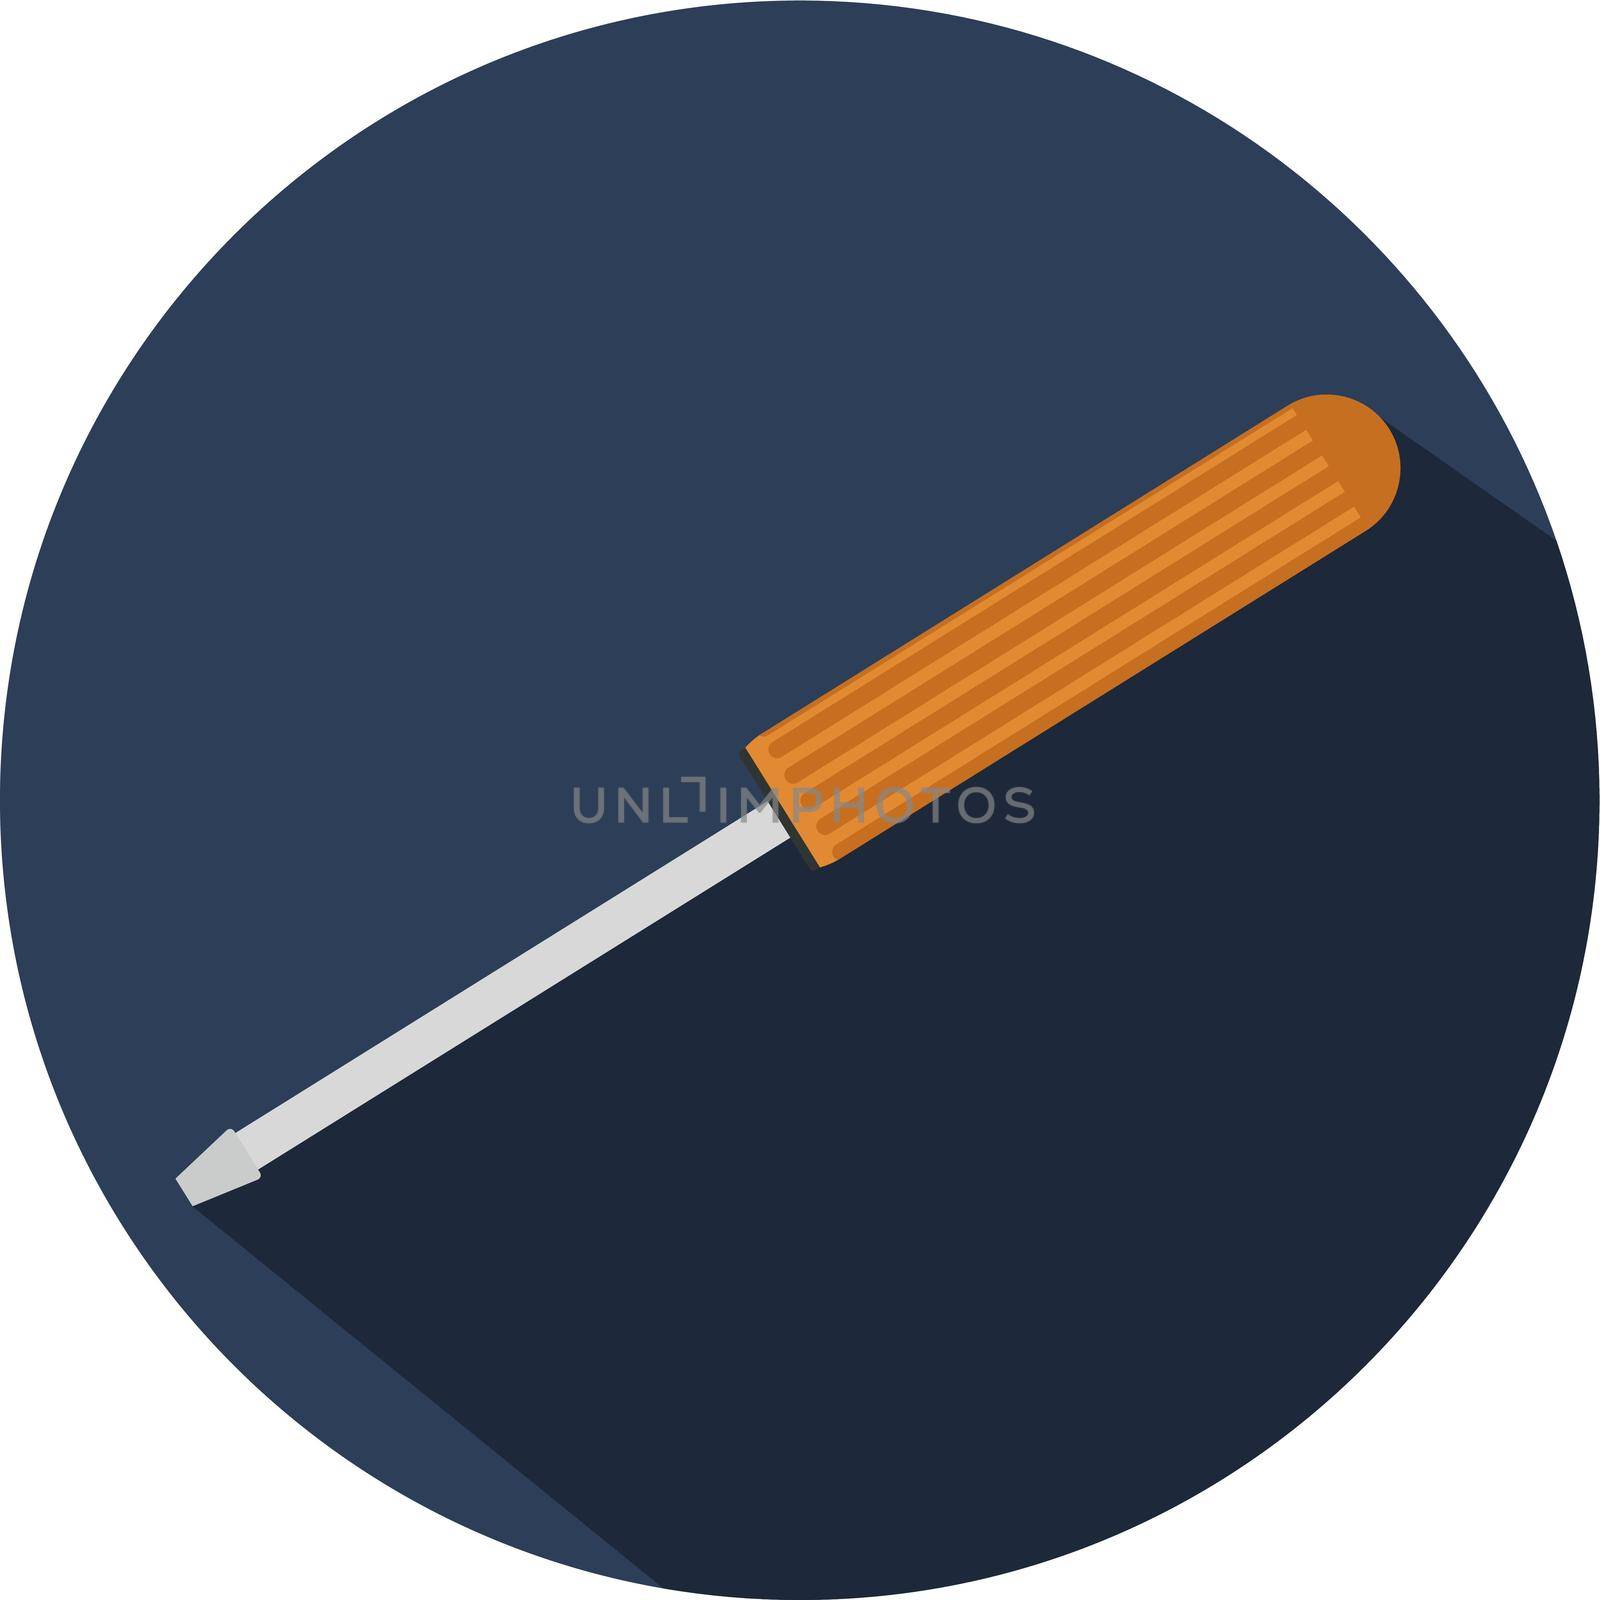 Orange screwdriver, illustration, vector on white background.